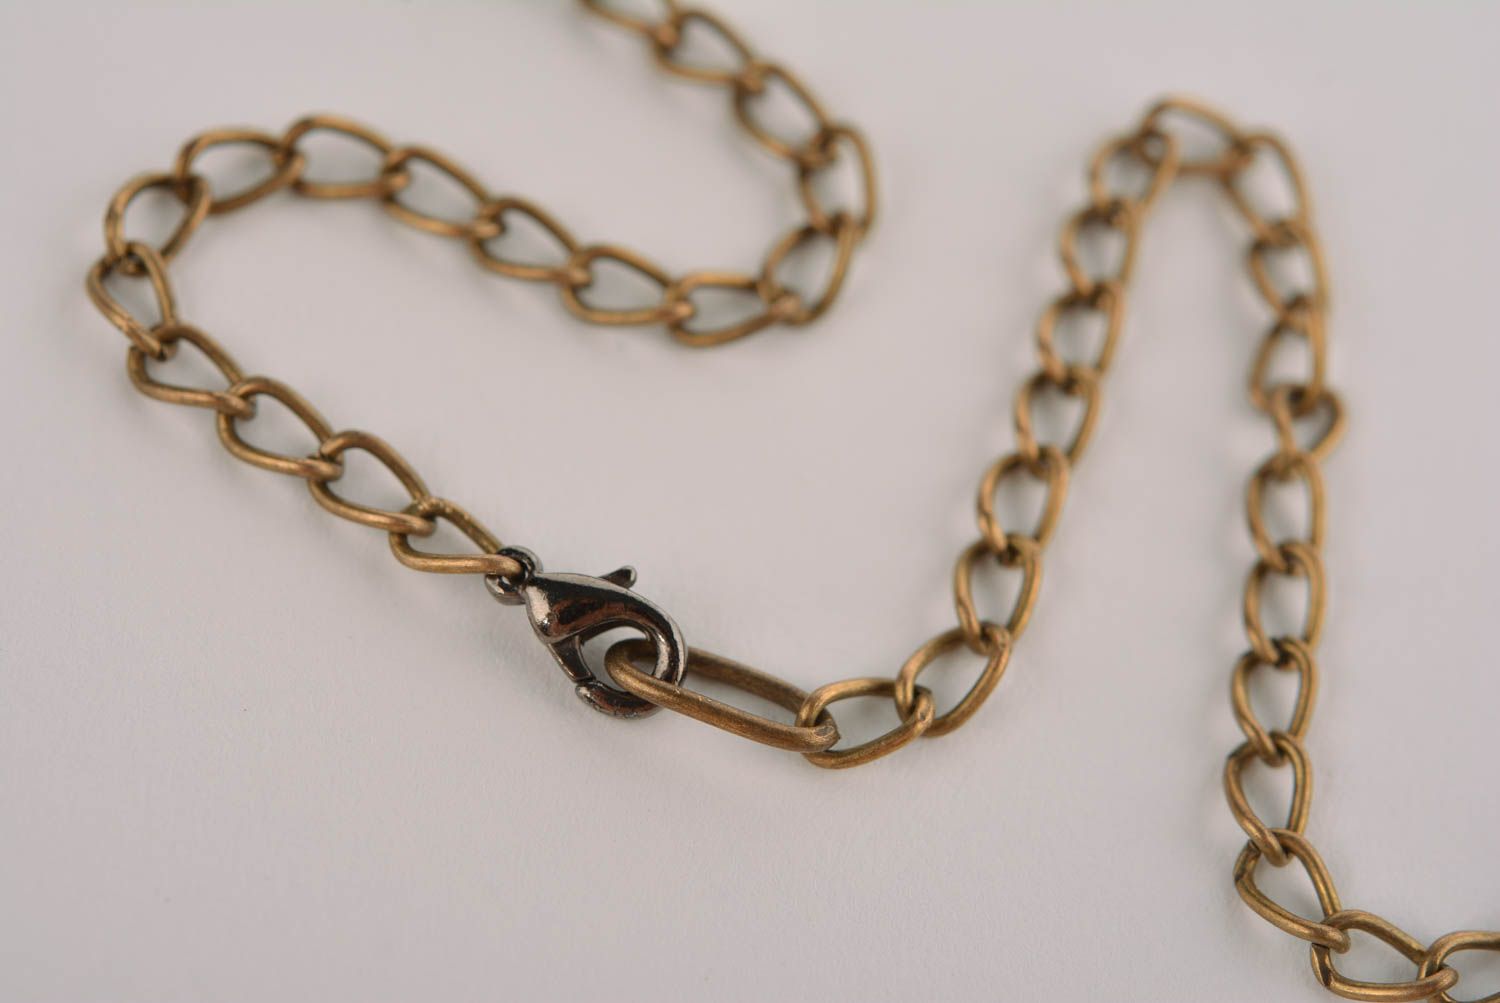 Unusual handmade glass pendant metal necklace metal jewelry designs gift ideas photo 5